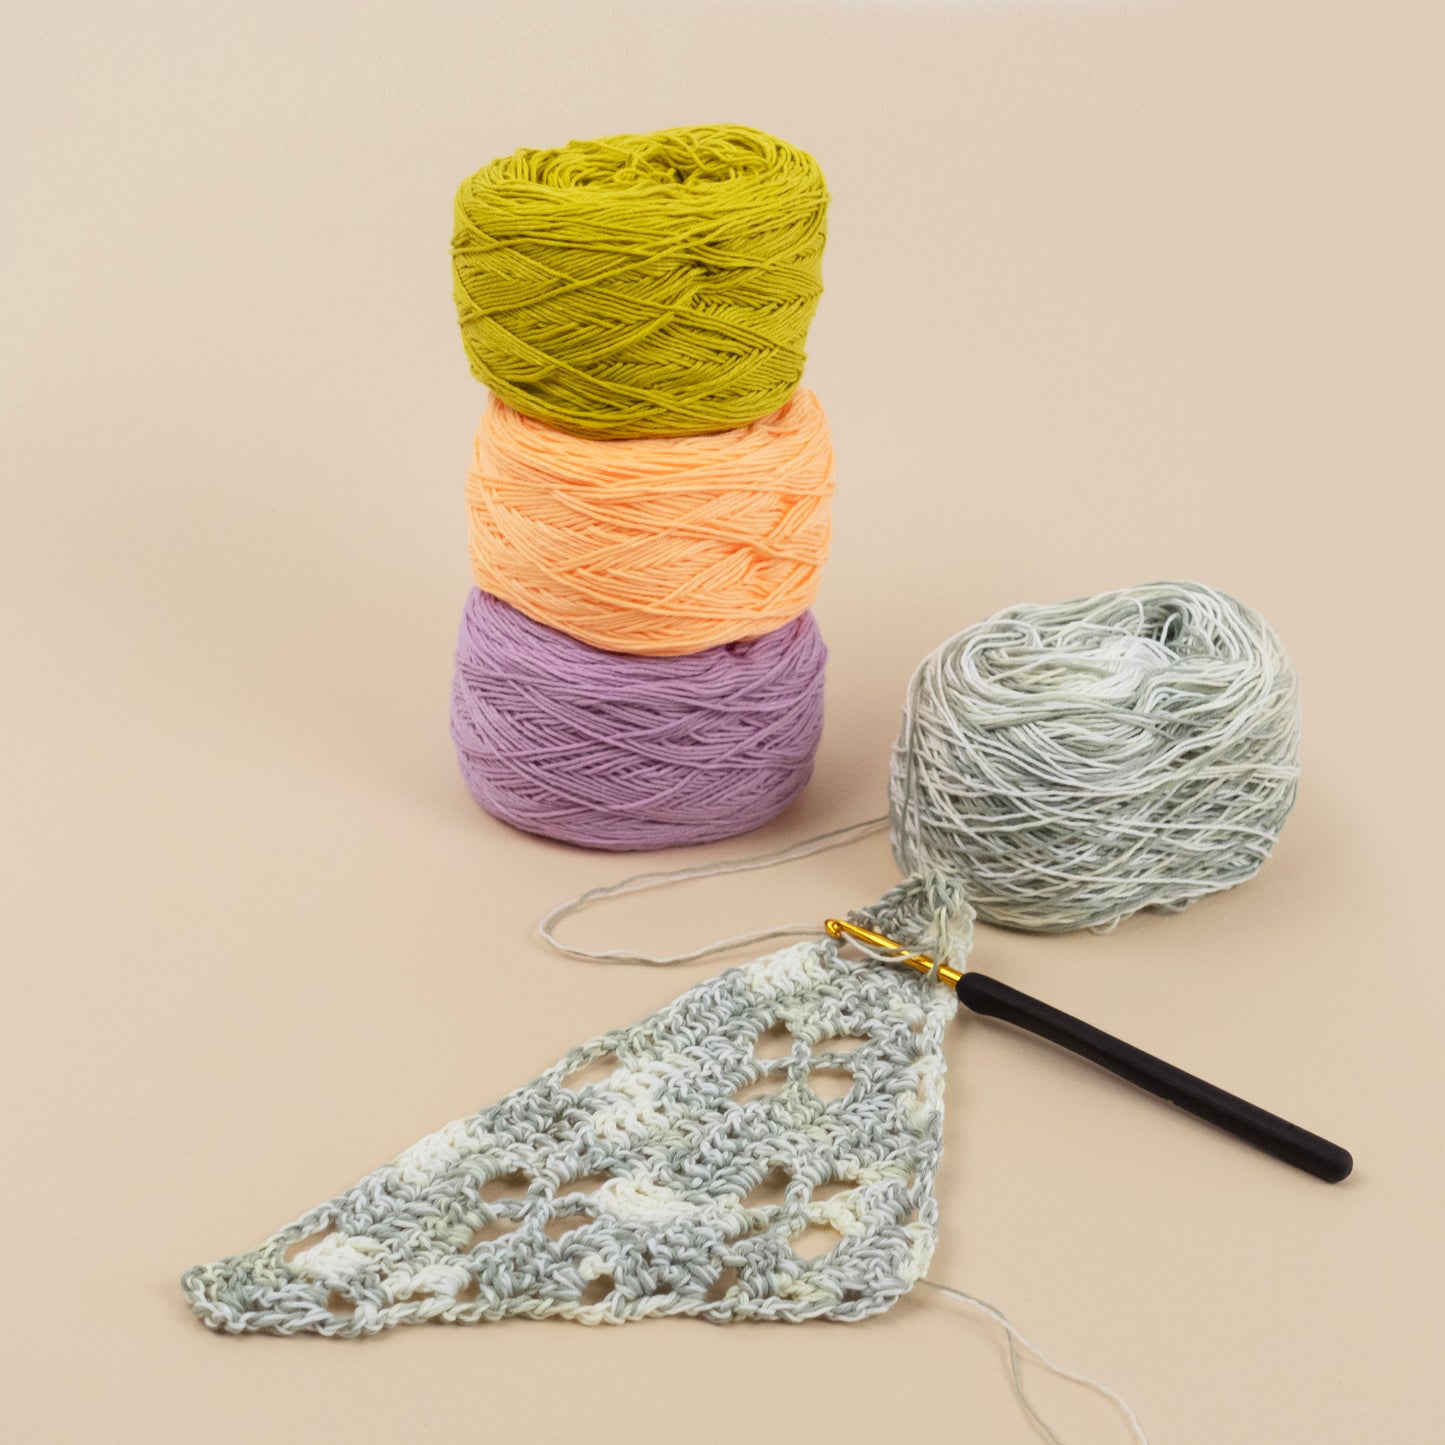 Algae Ecology-Inspired Crochet Bandana